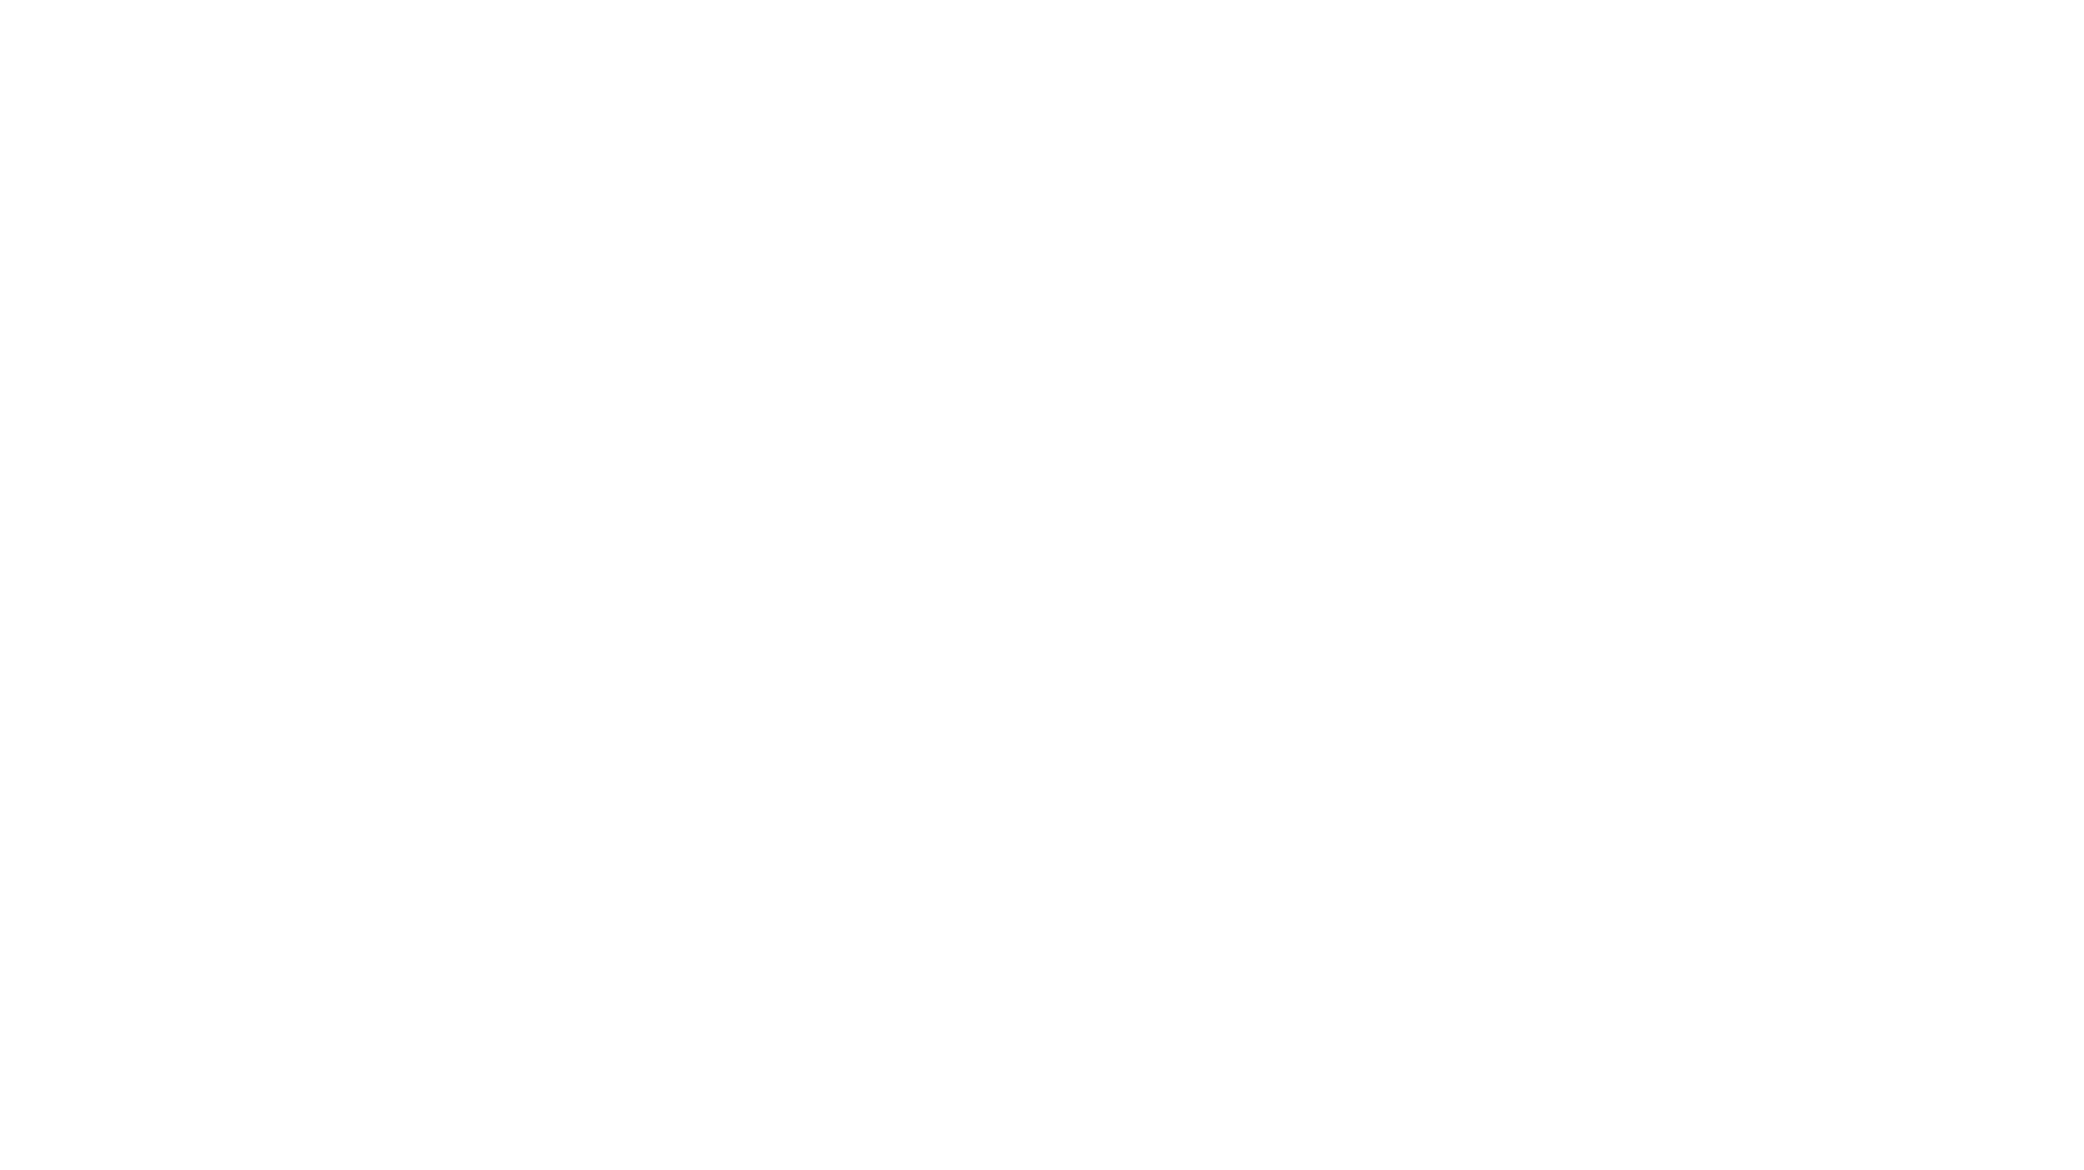 Colorado_For_All_logo.png